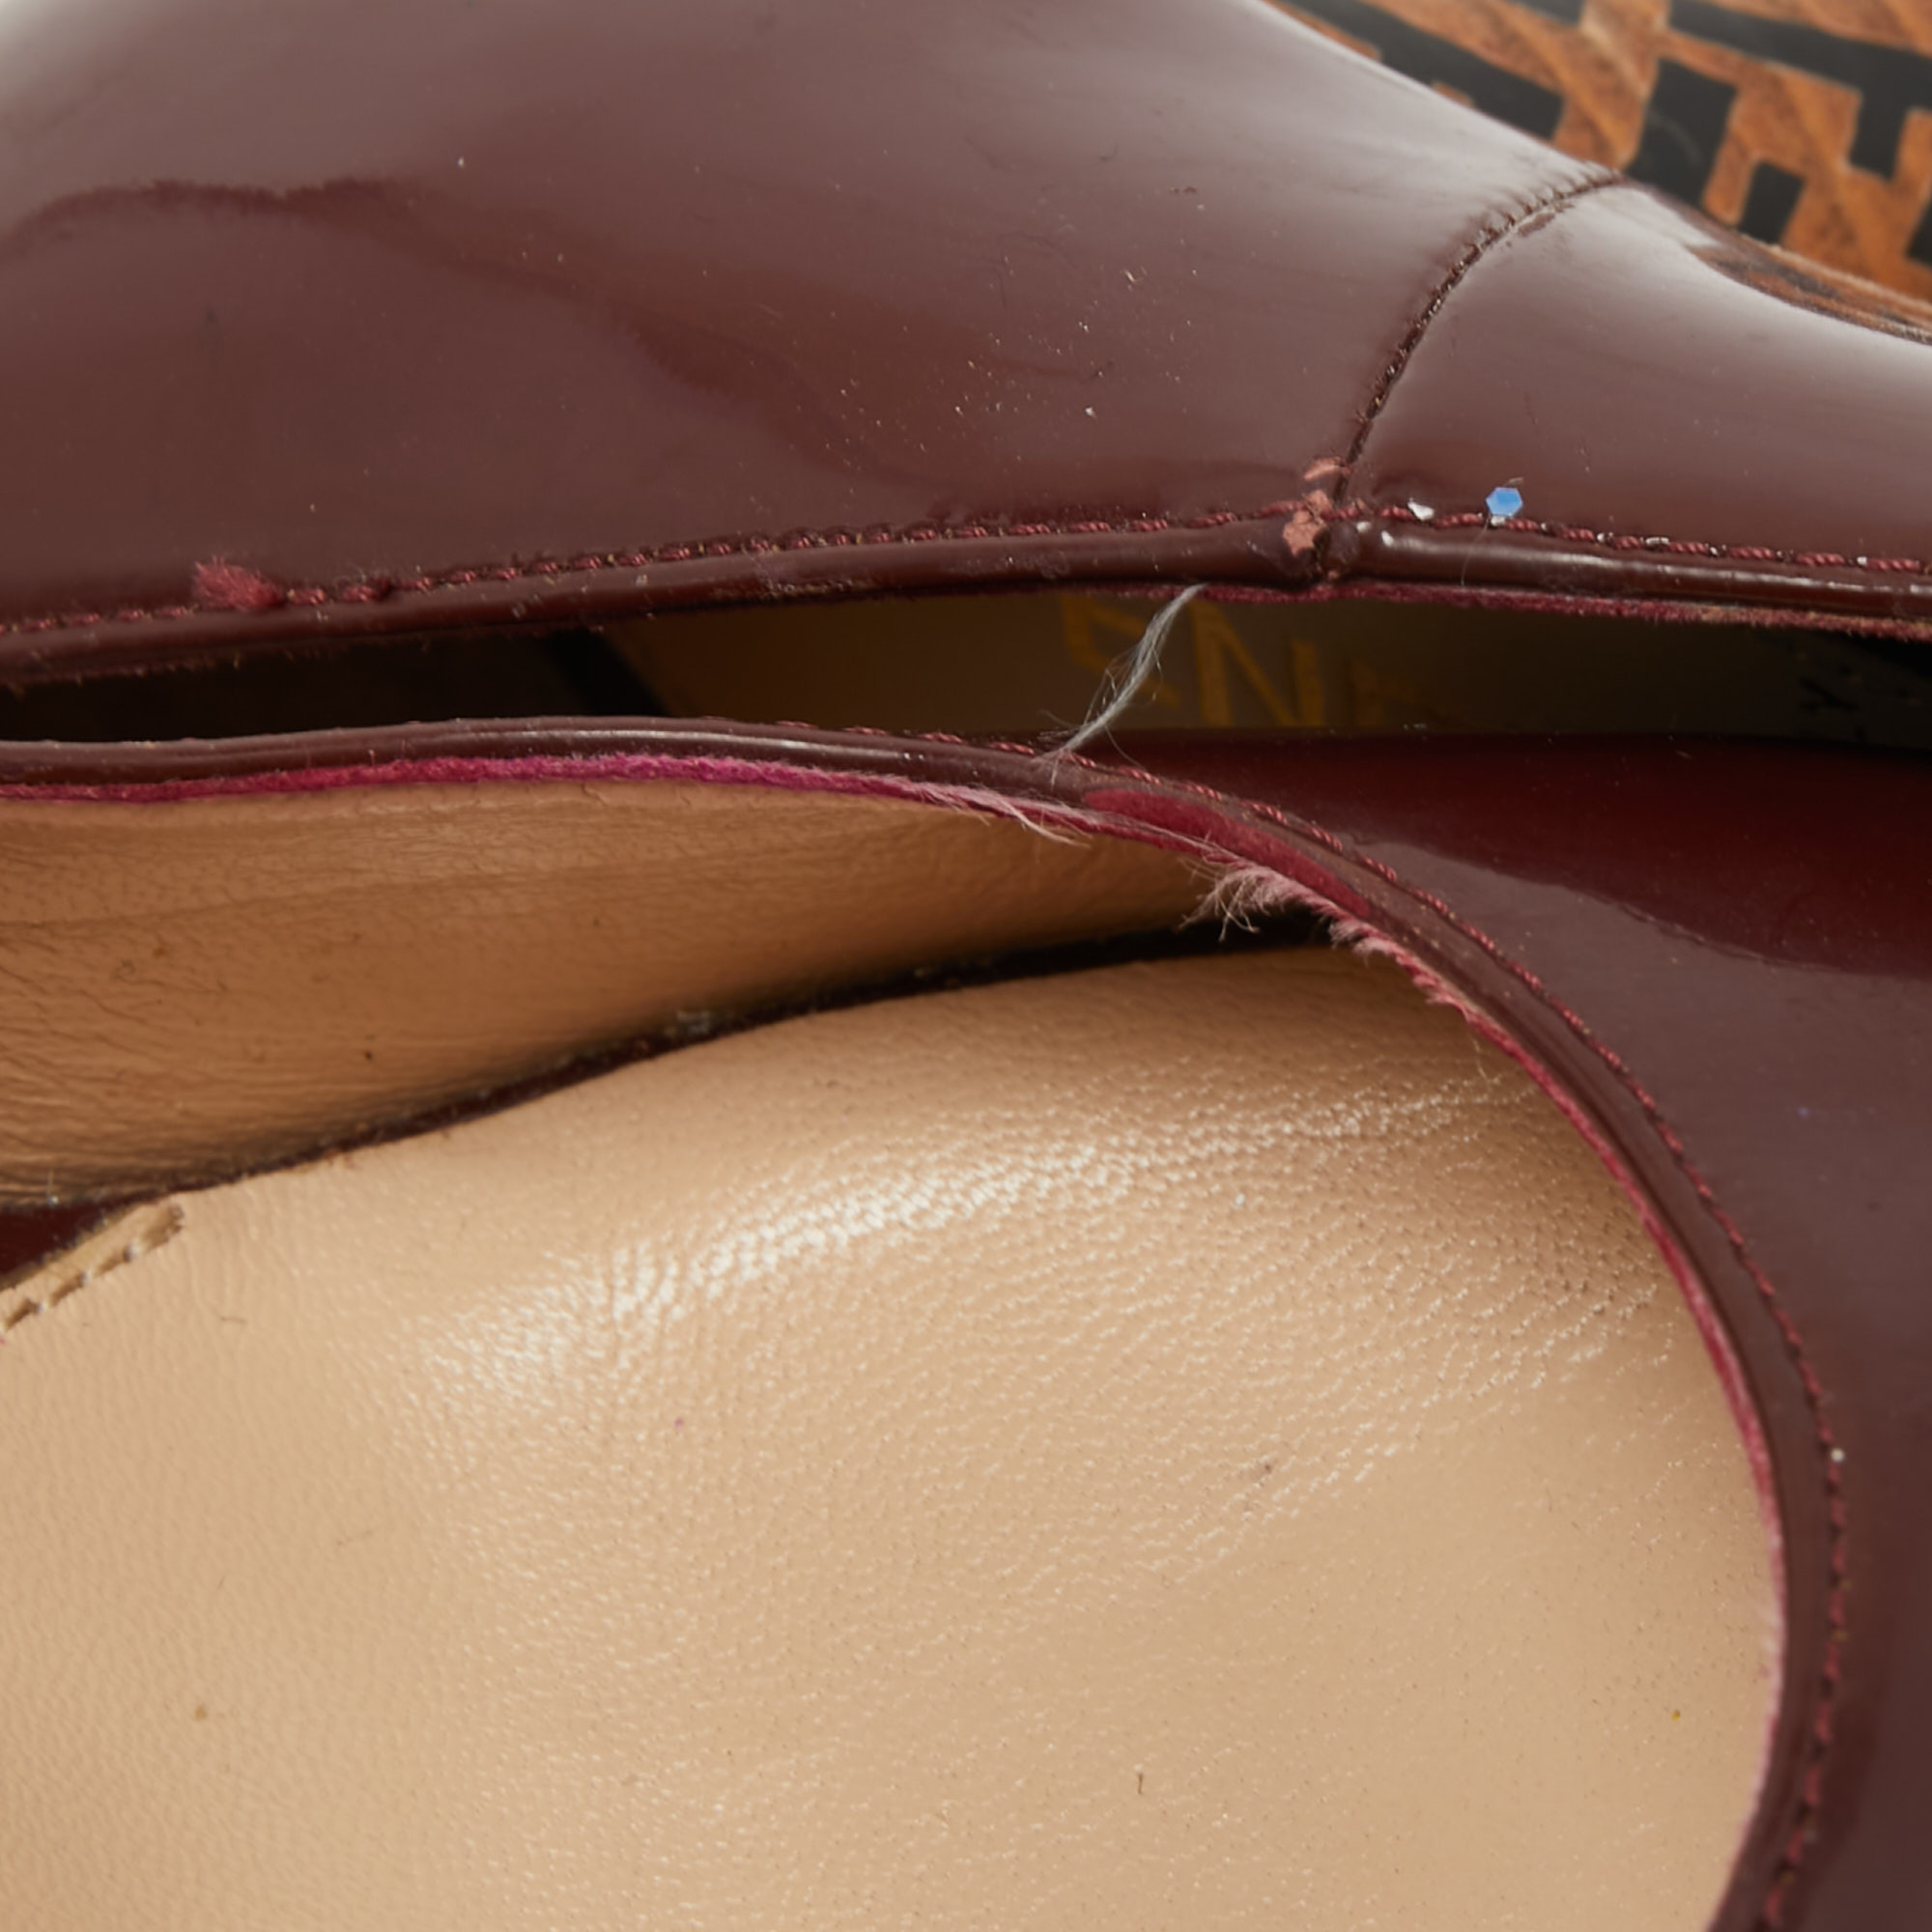 Fendi Burgundy Patent Leather Zucca Print Heel Peep Toe Pumps Size 38